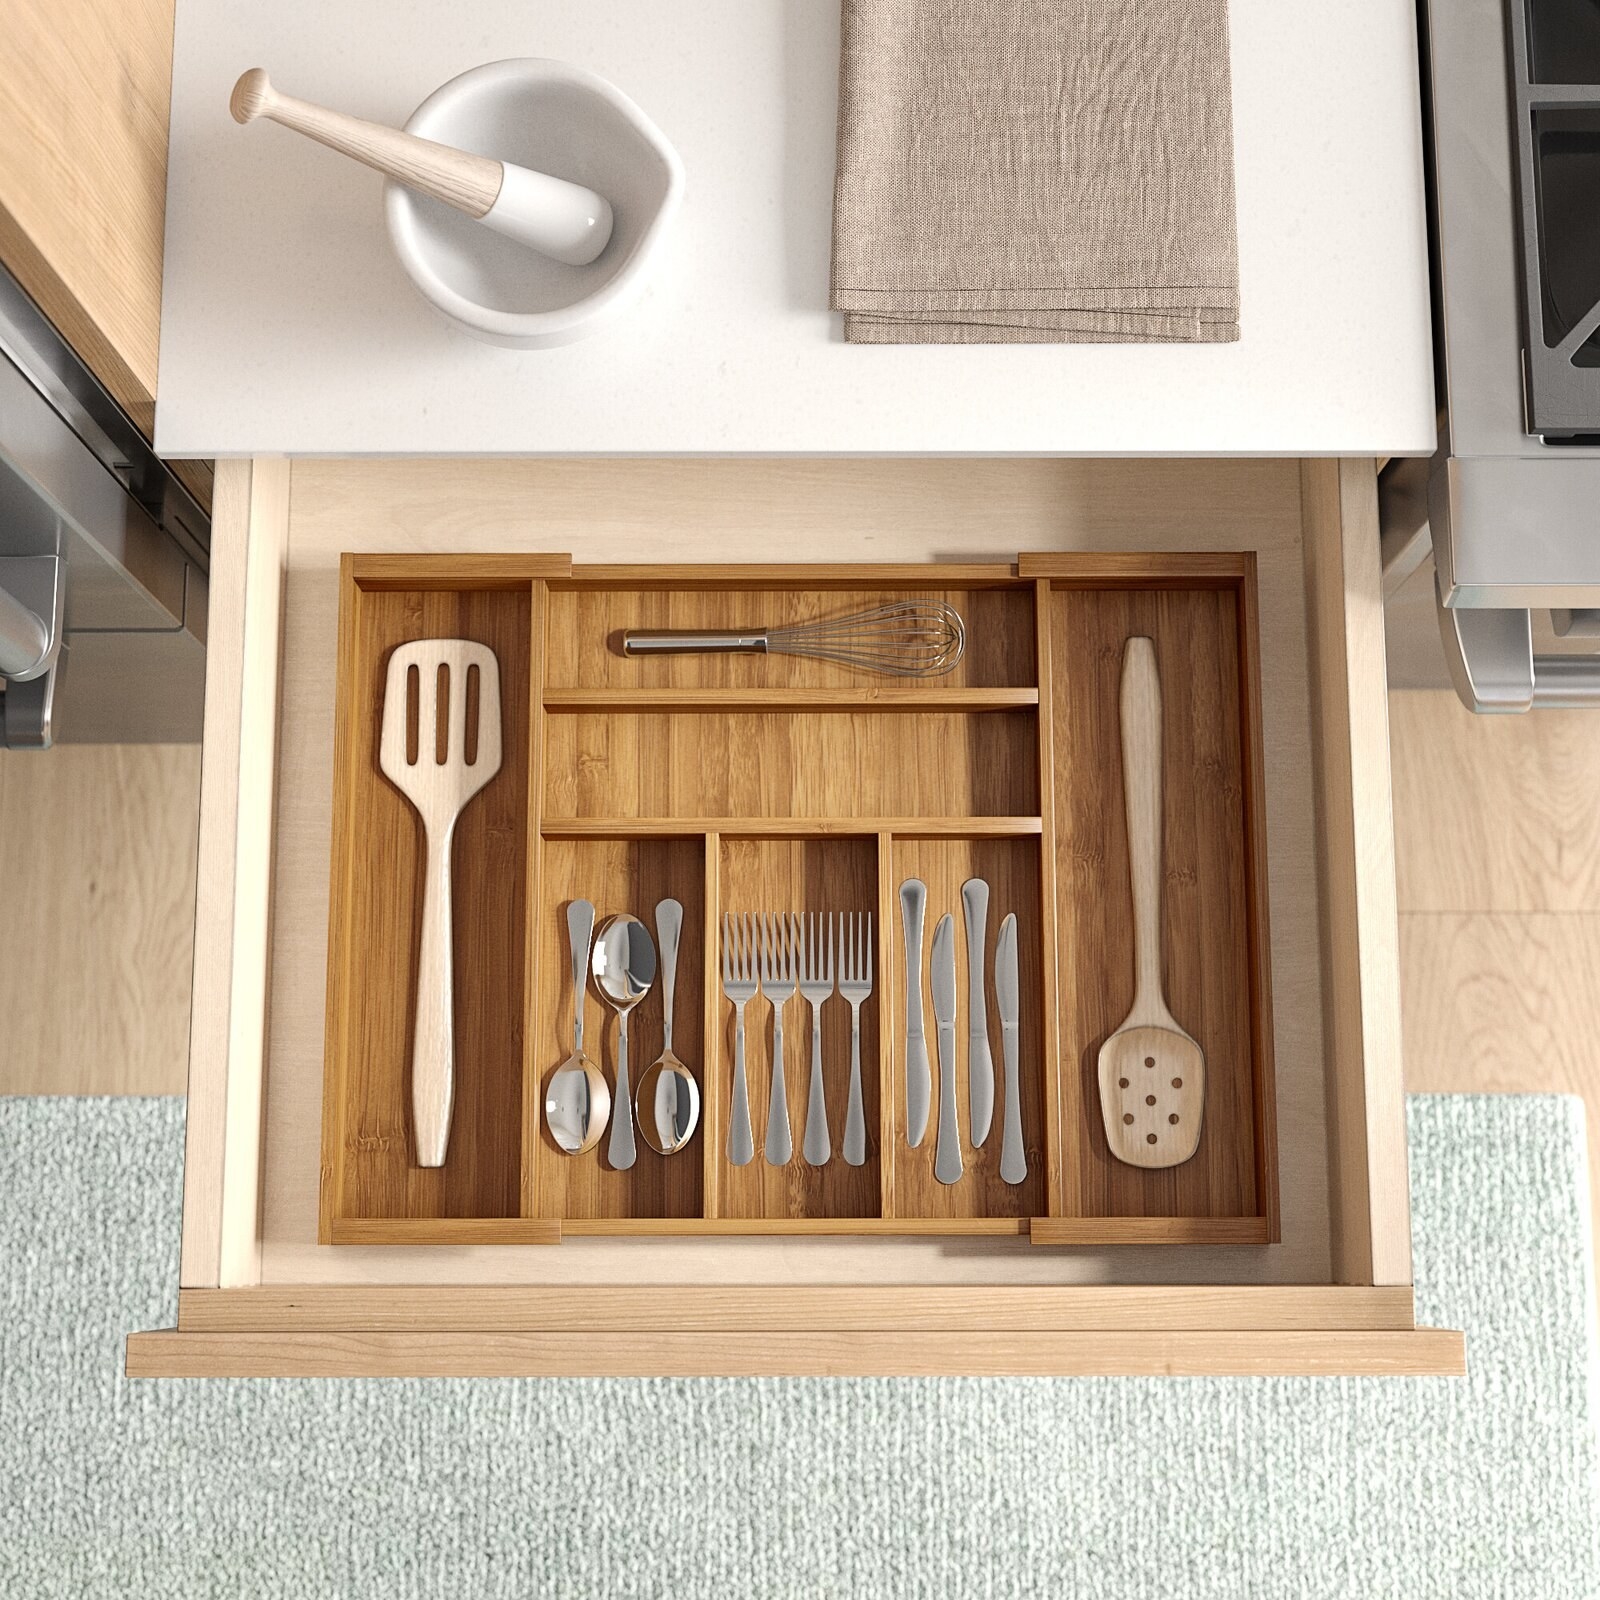 The drawer organizer with utensils